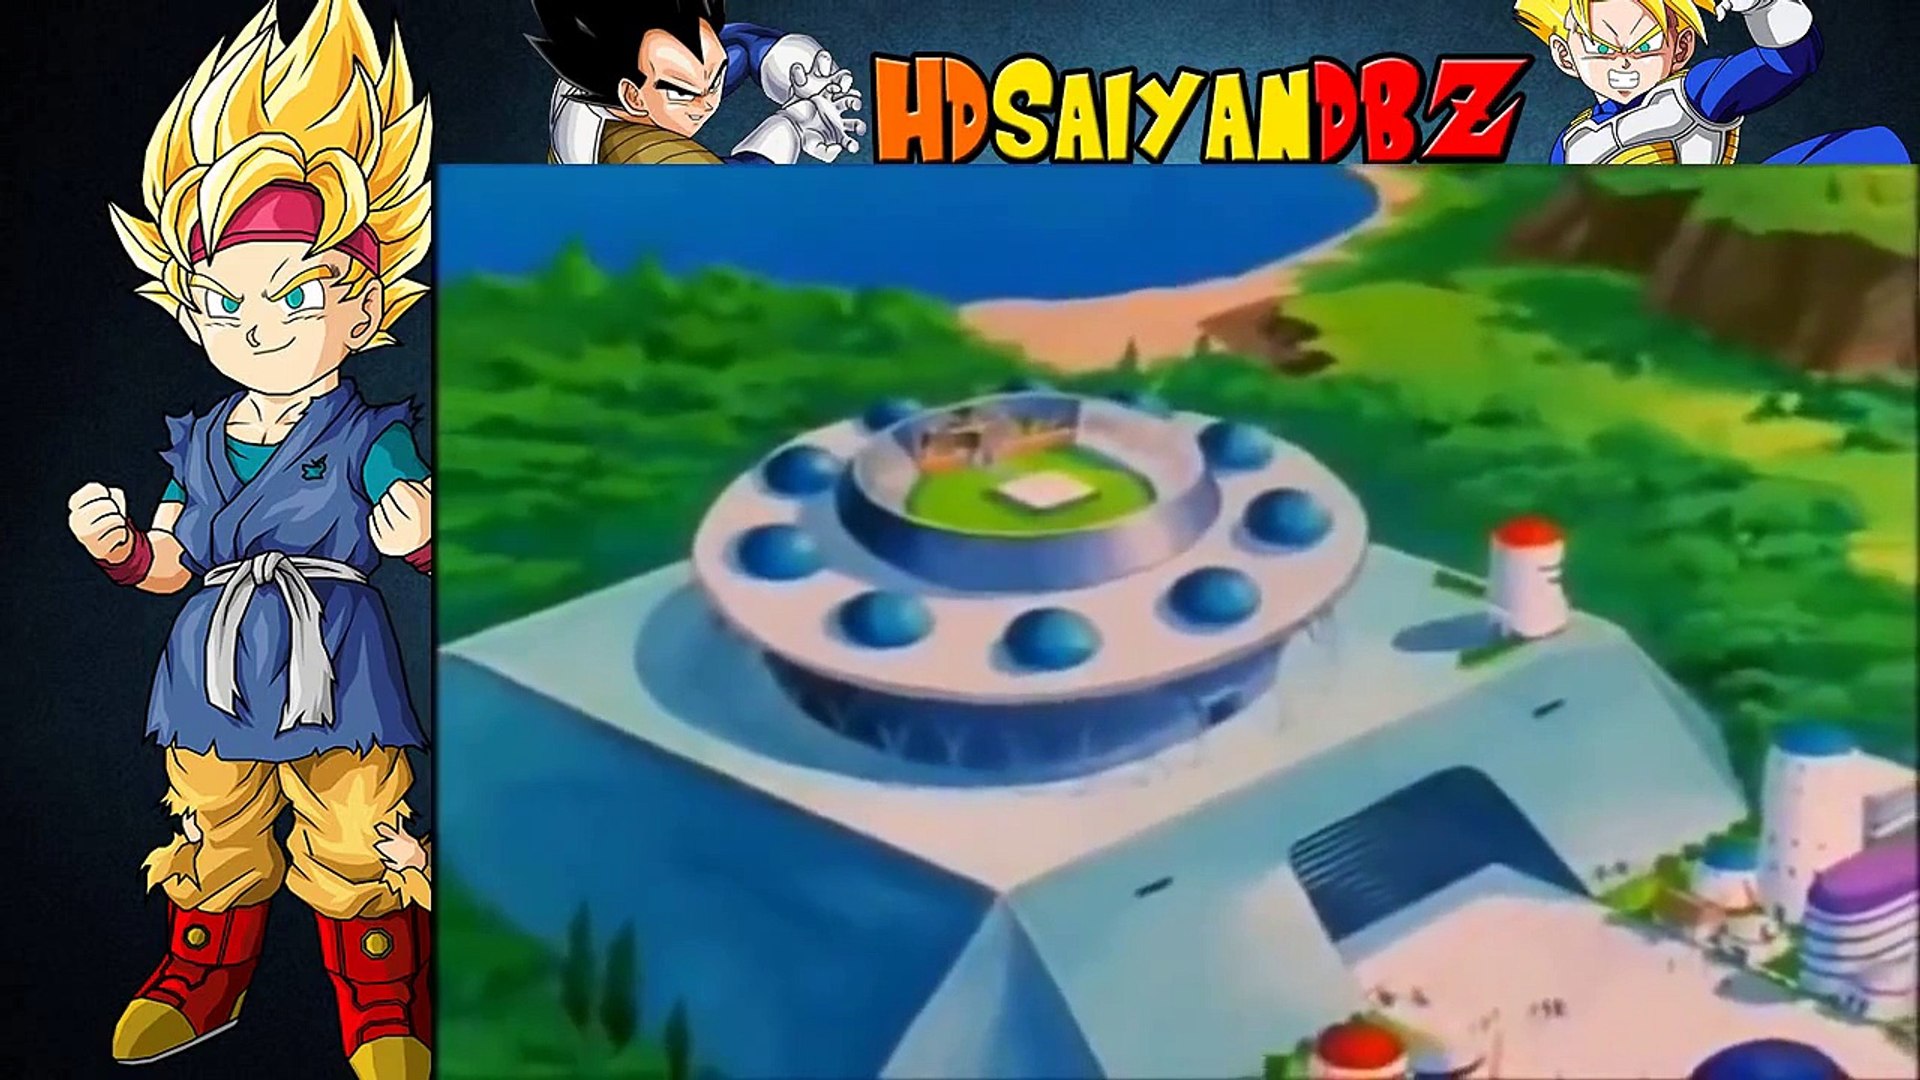 Goku Jr Vs Vegeta Jr Pelea Completa [Audio Latino] - Dailymotion Video